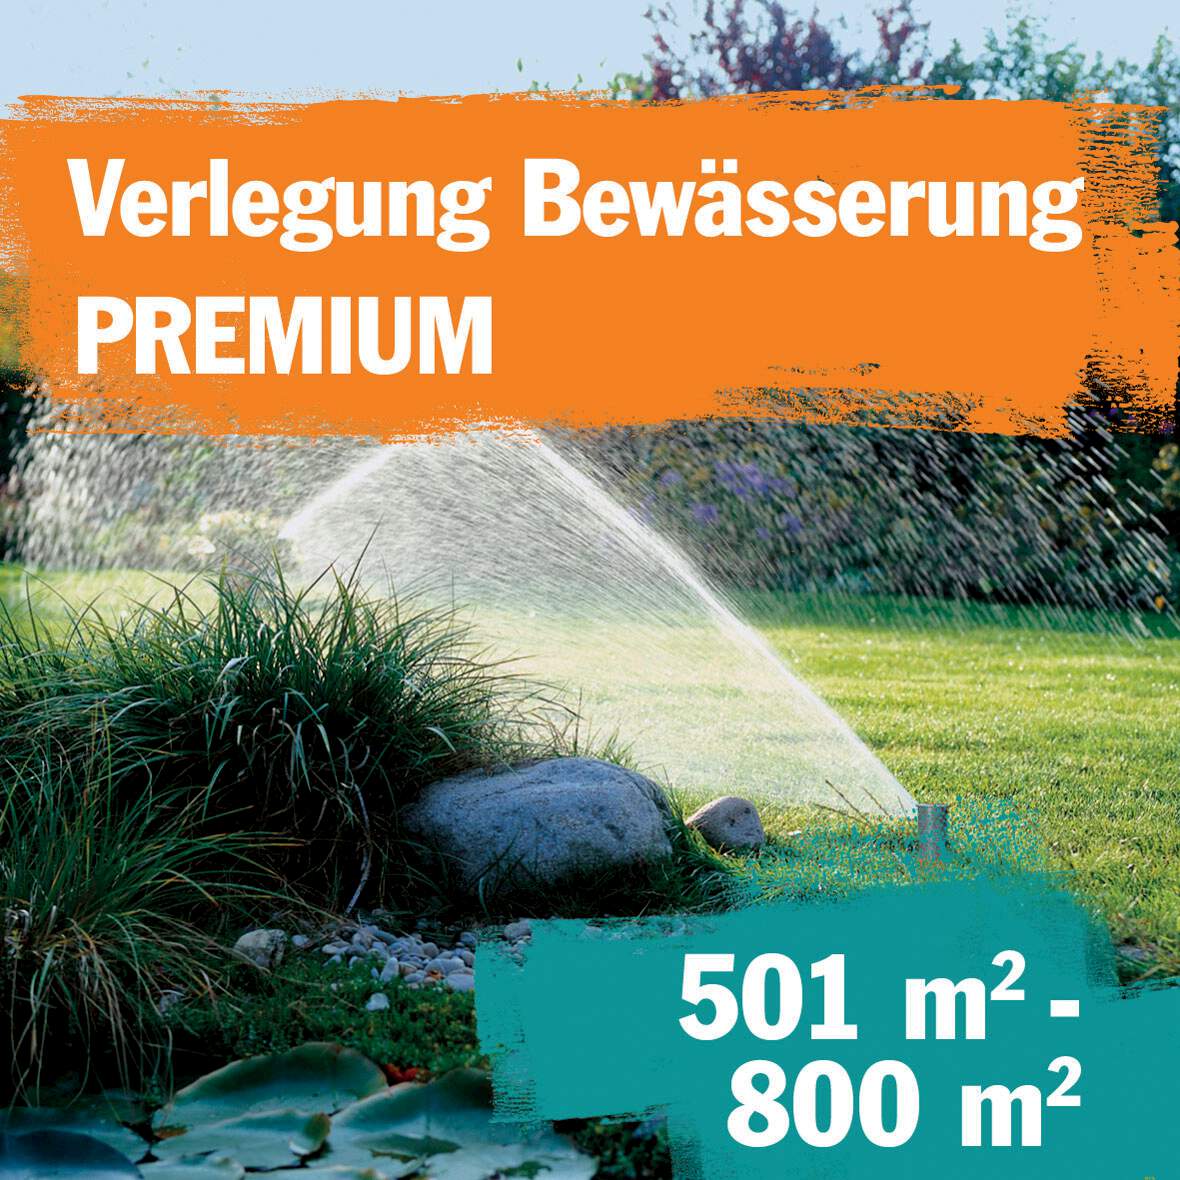 1257909 - Bewässerung Verleg. 501m2- 800m2 Premium